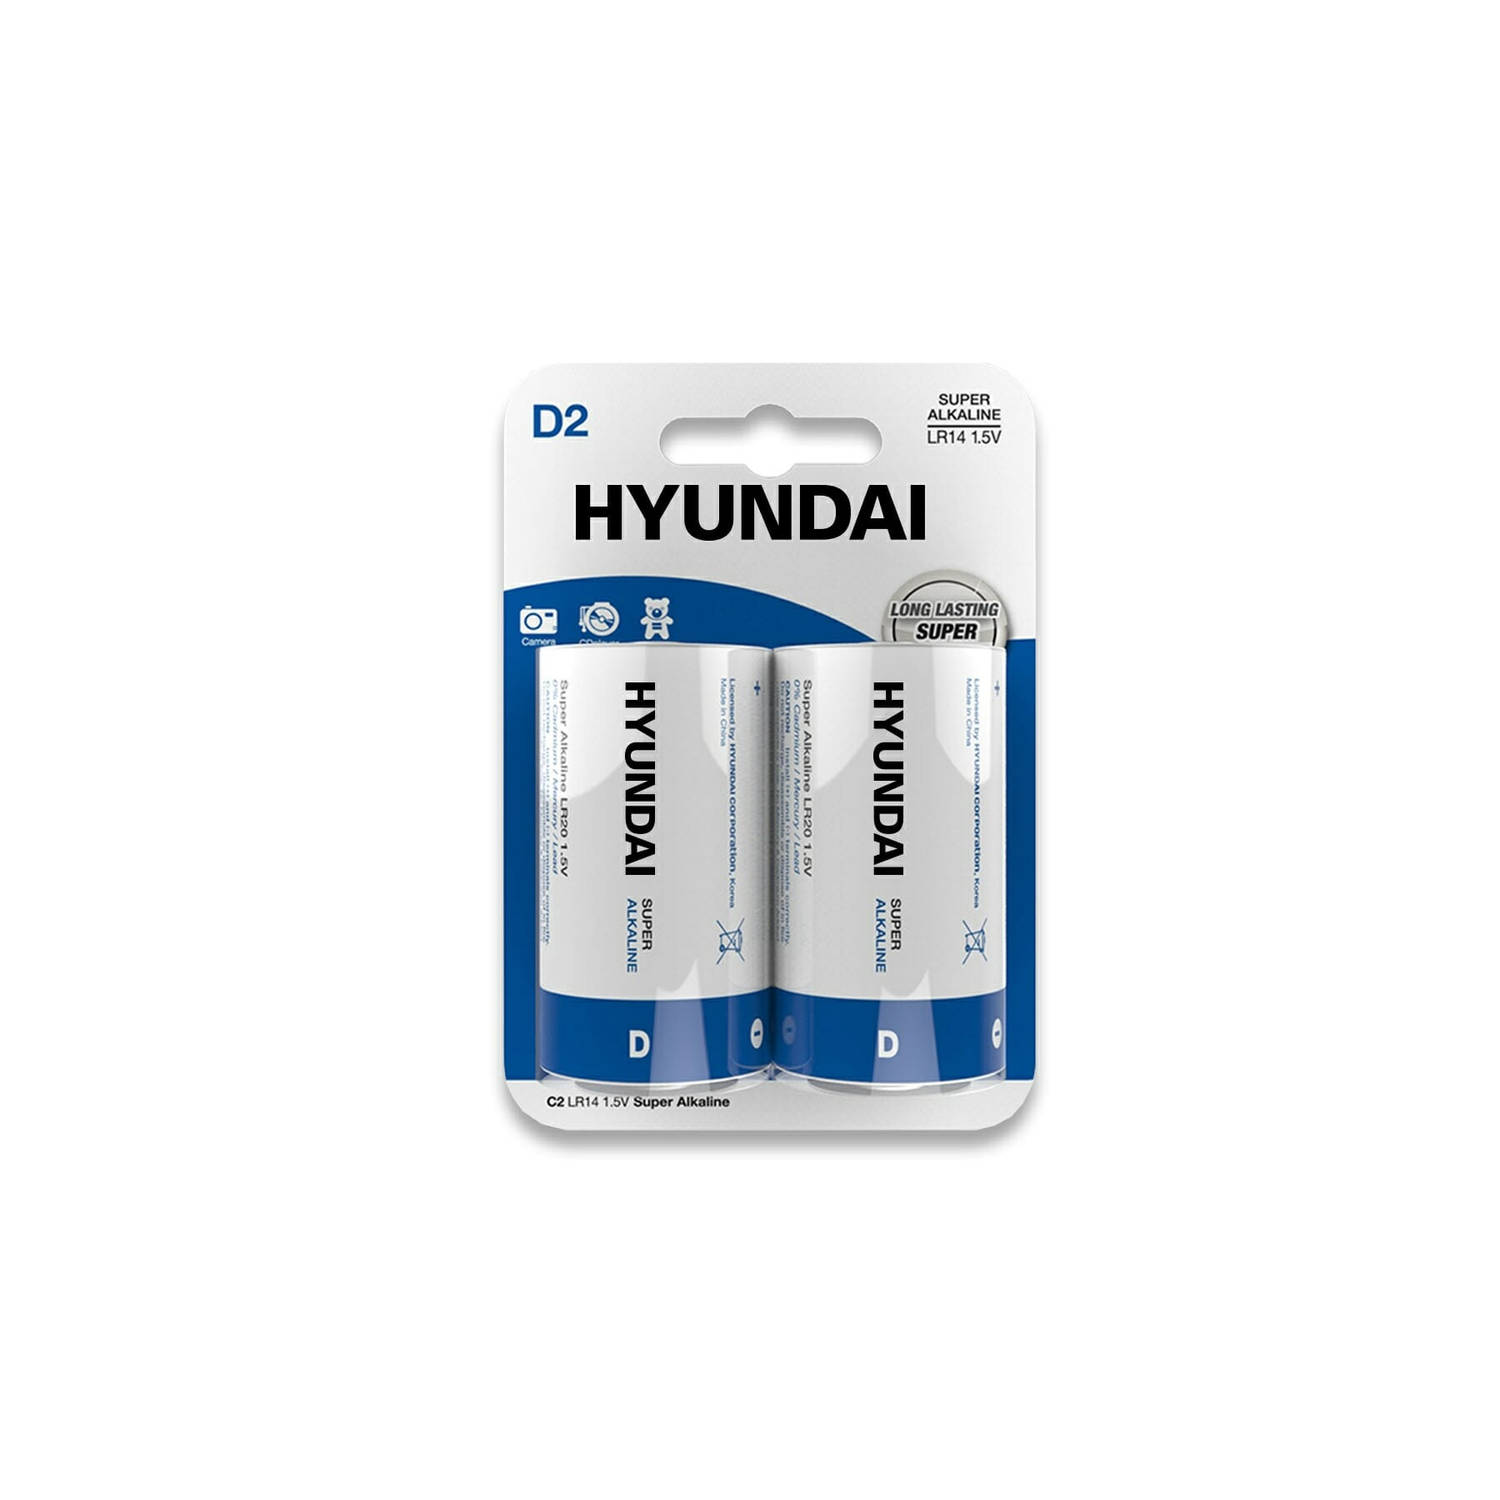 Hyundai Batteries - Super Alkaline D batterijen - 2 stuks